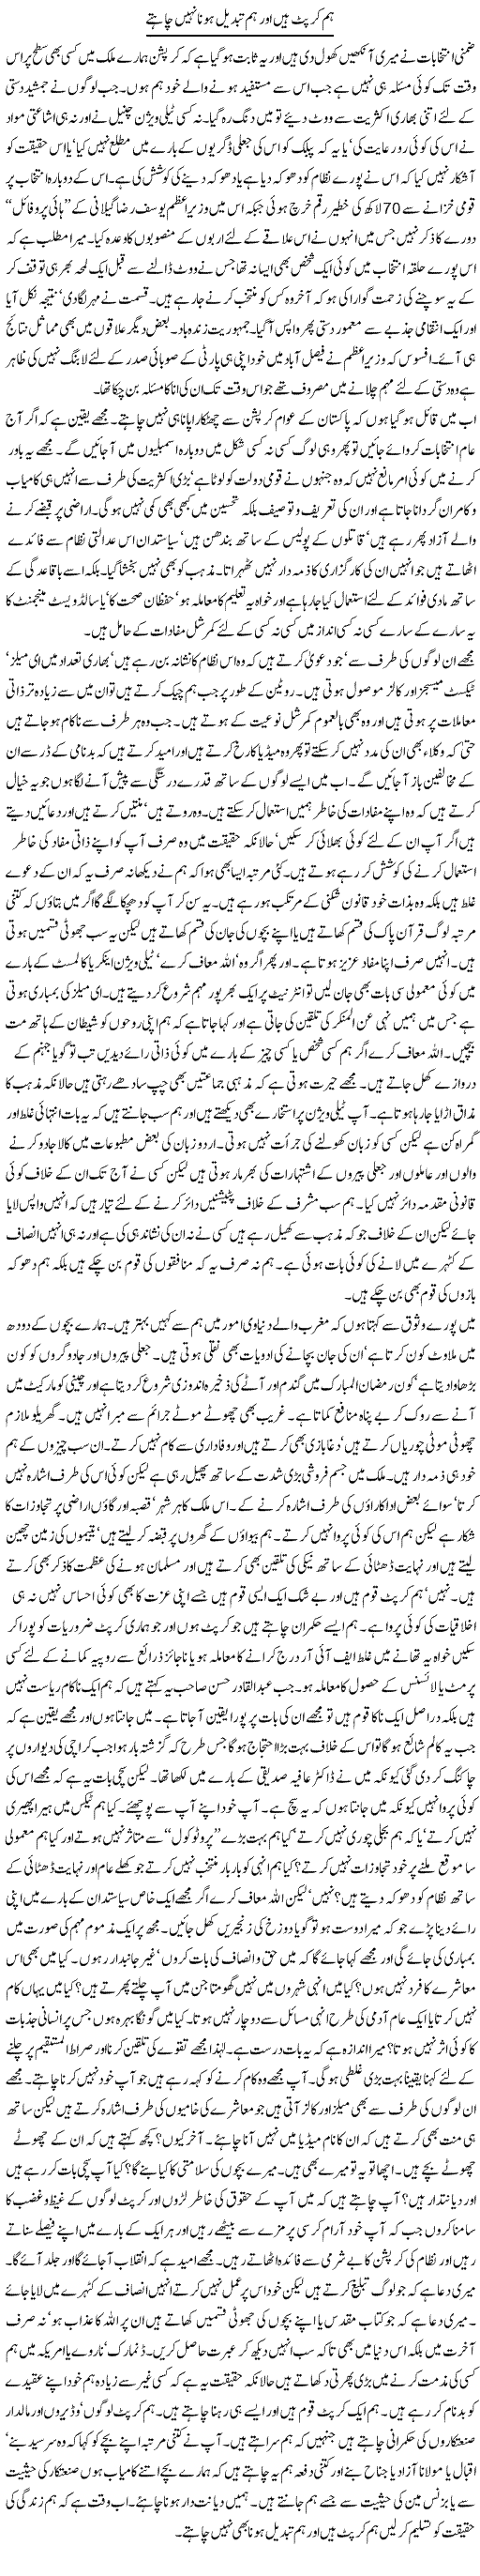 Hum Corrupt han Express Column Mubashir Luqman 21 May 2010